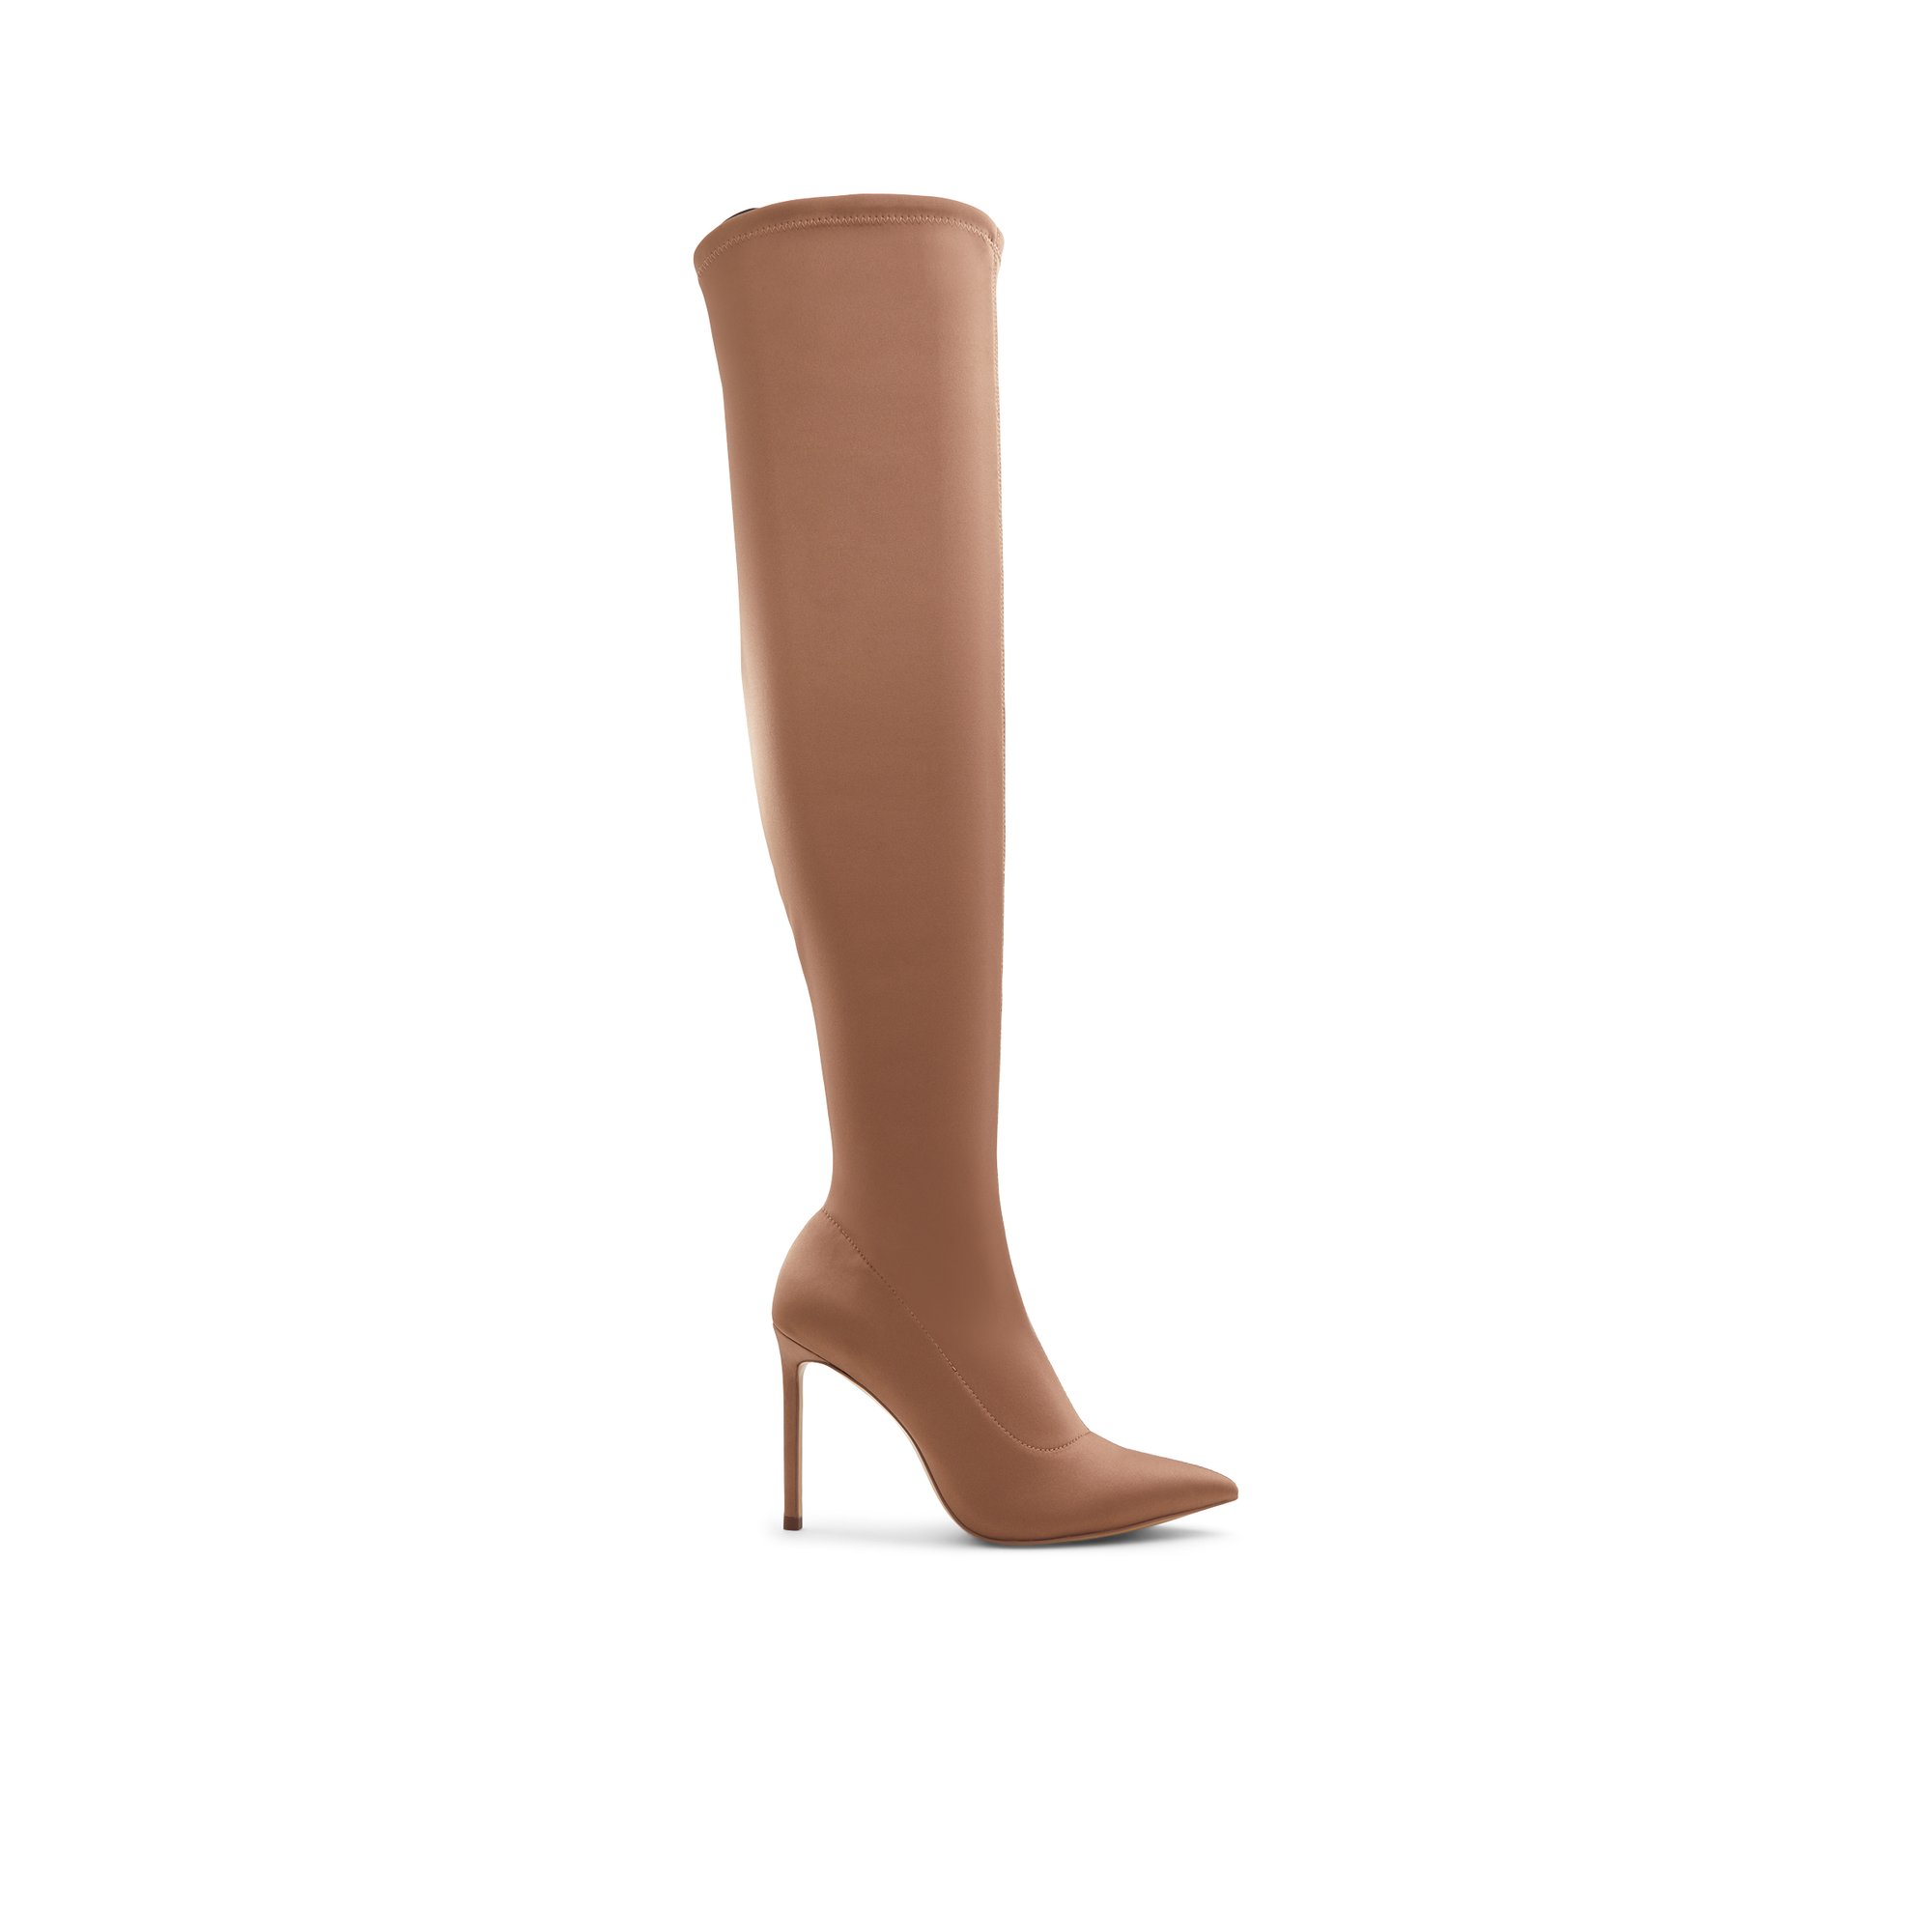 ALDO Acassia - Women's Boots Dress - Brown